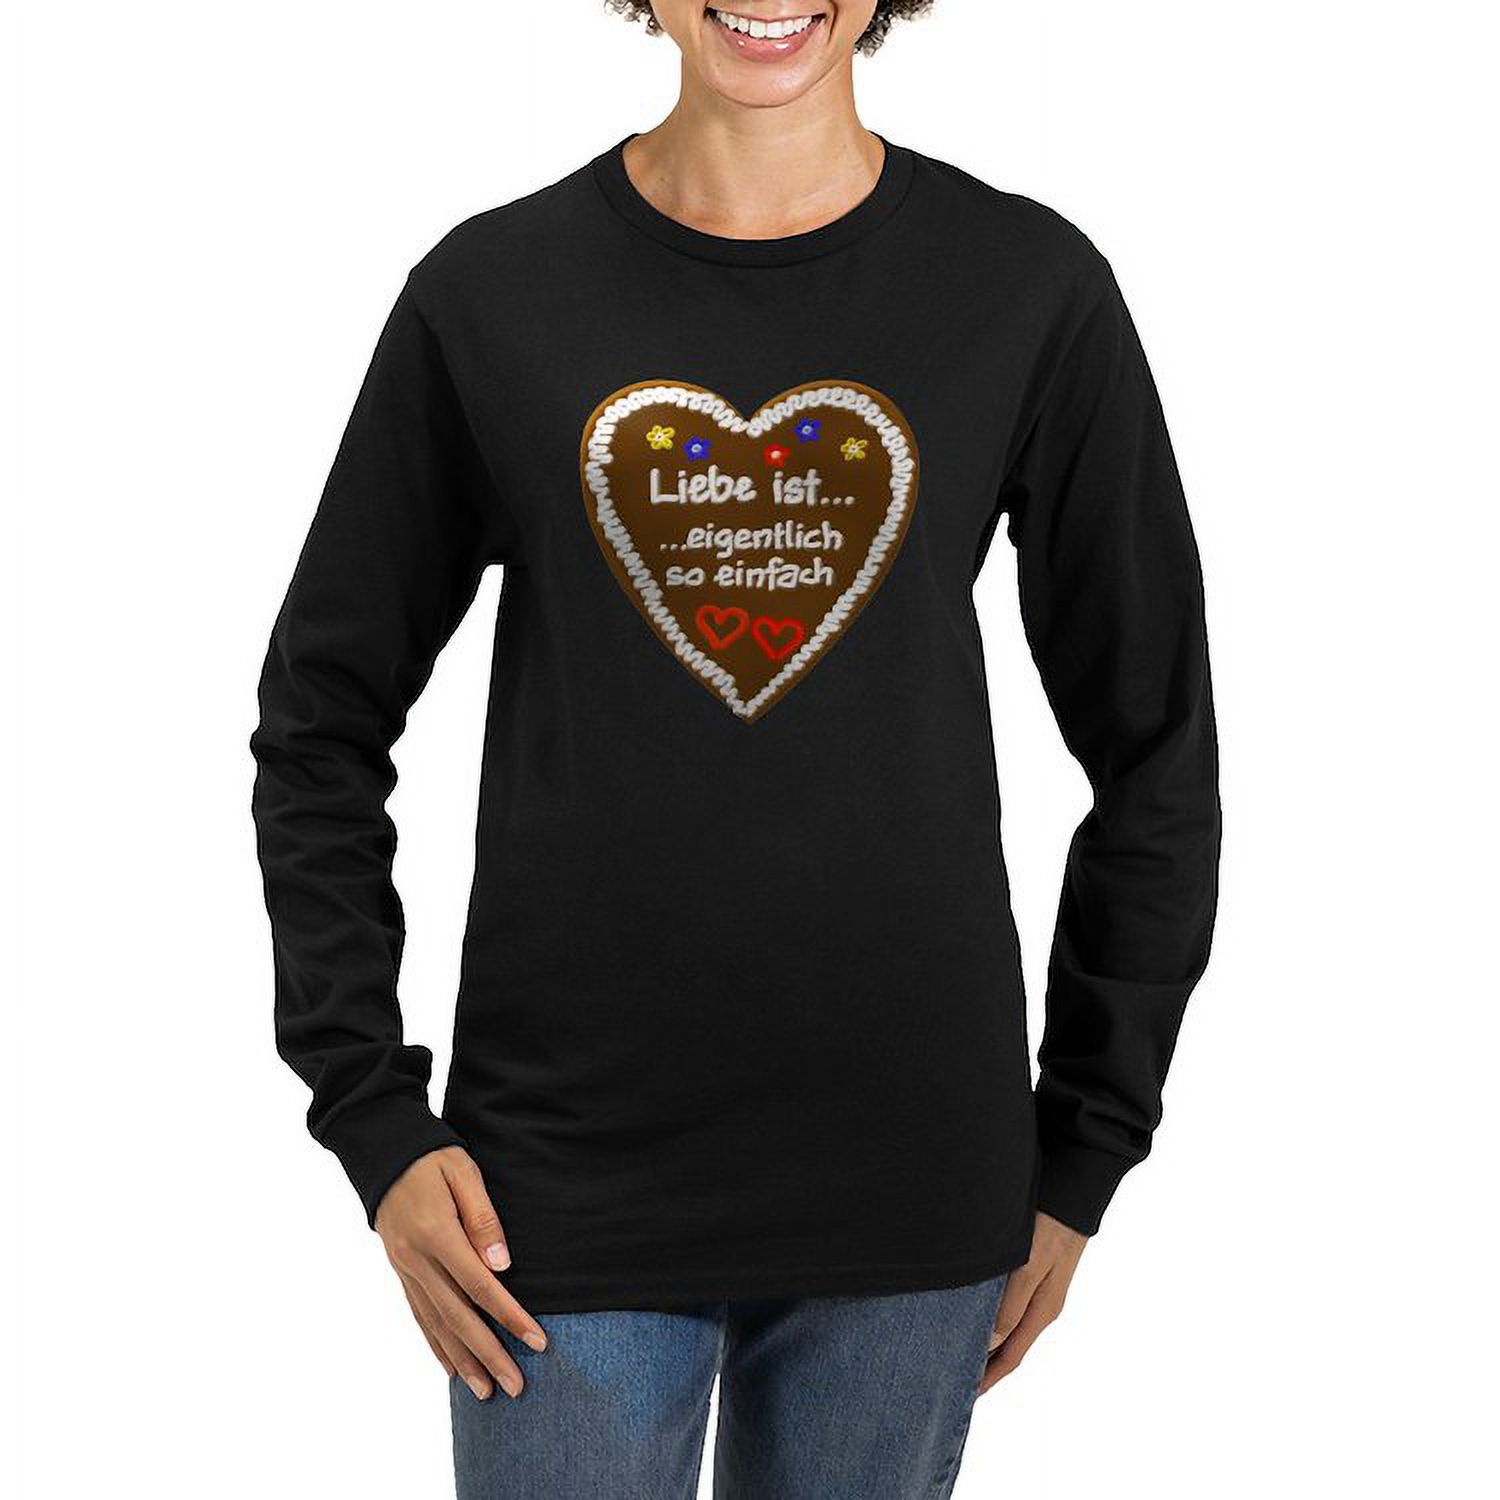 CafePress - Liebe Ist... 2 Women's Long Sleeve Dark T Shirt - Women's Long Sleeve Graphic Tee Casual Fit - image 1 of 4